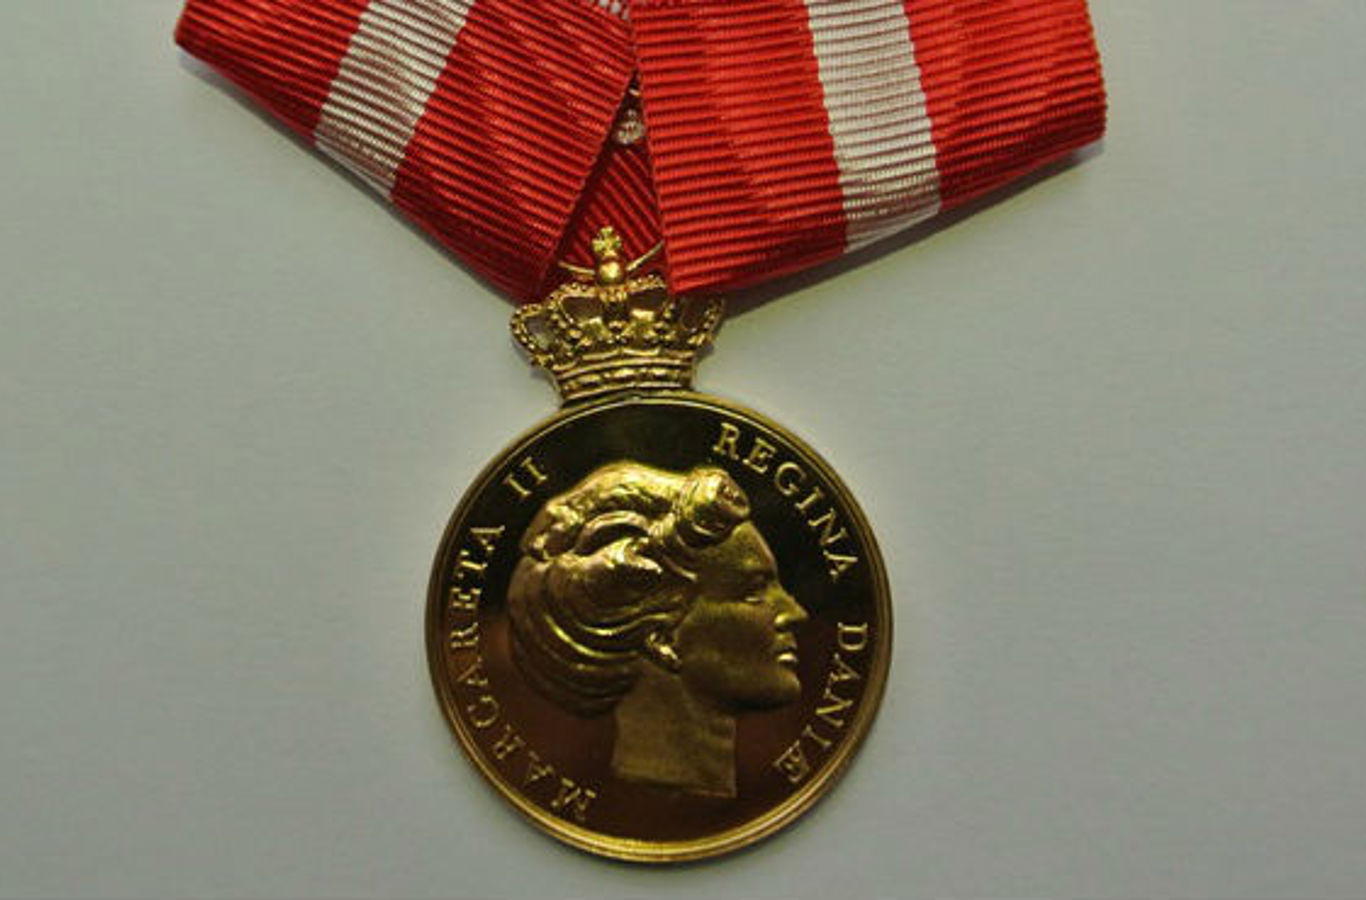 Den Kongelige Belønningsmedalje i guld med krone og inskription.